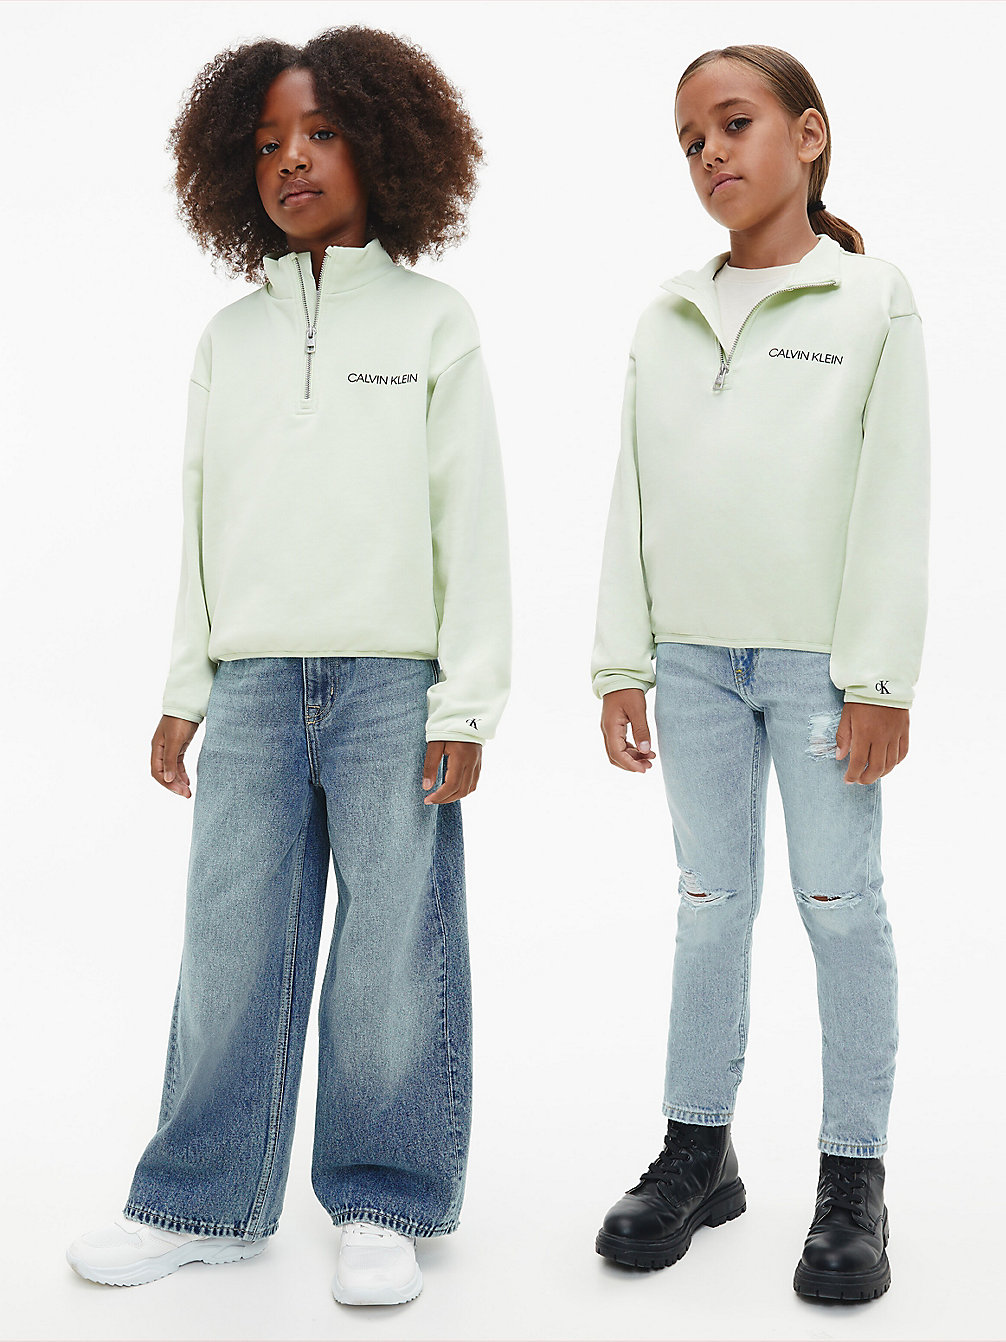 SEAFOAM GREEN Relaxed Unisex Sweatshirt Met Rits In Hals undefined kids unisex Calvin Klein